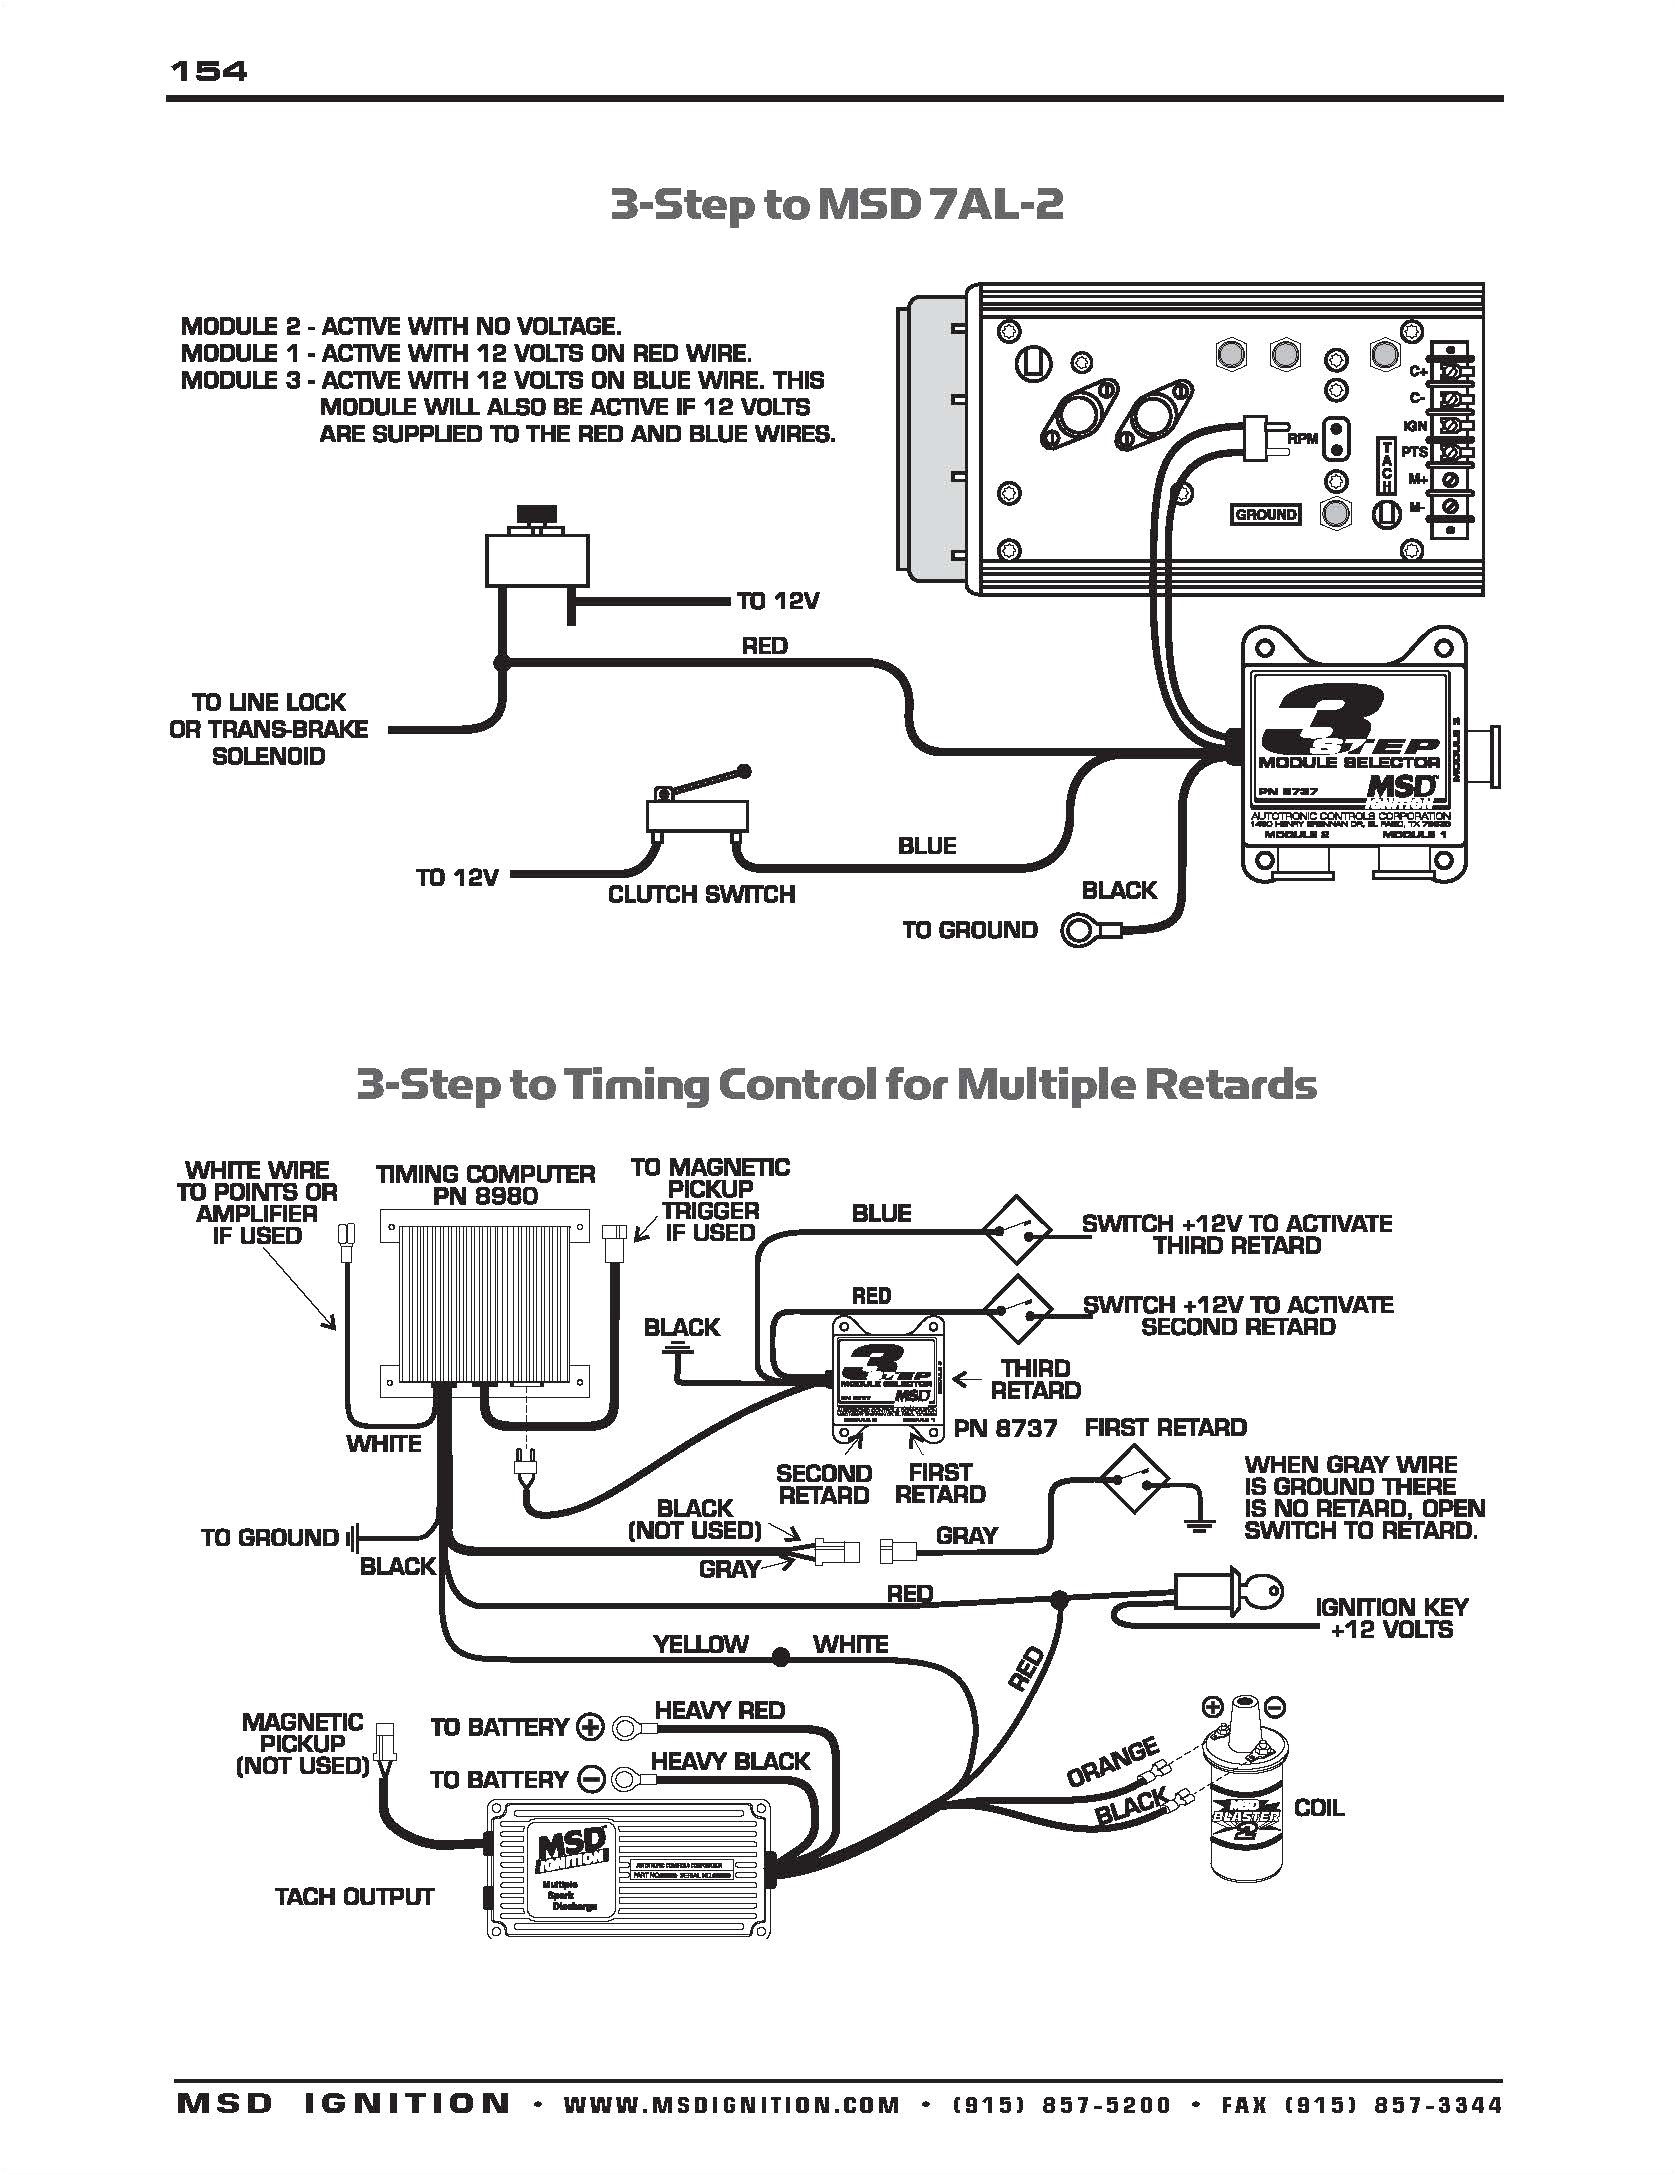 1966 mustang wiring diagram fresh corolla wiring diagram unique 1999 toyota corolla parts diagram new pictures of 1966 mustang wiring diagram jpg